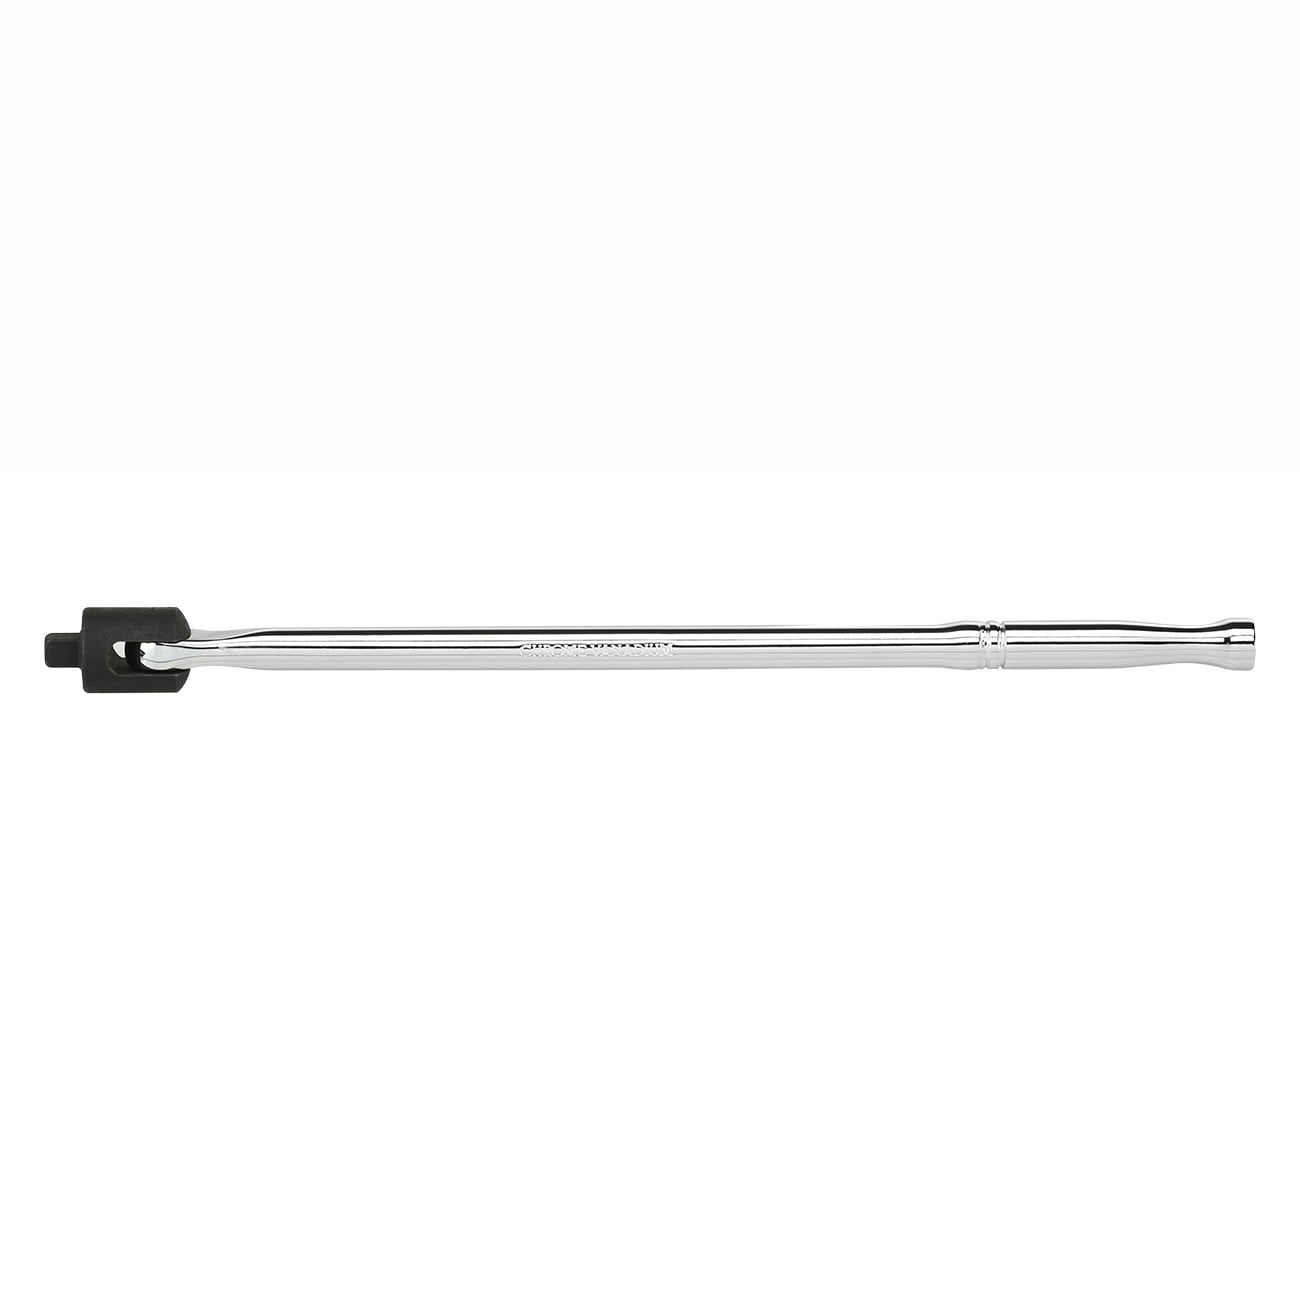 Drive x 15 in Premium Breaker Bar Ridgerock Tools Inc. Neiko 00338A  3/8 in 